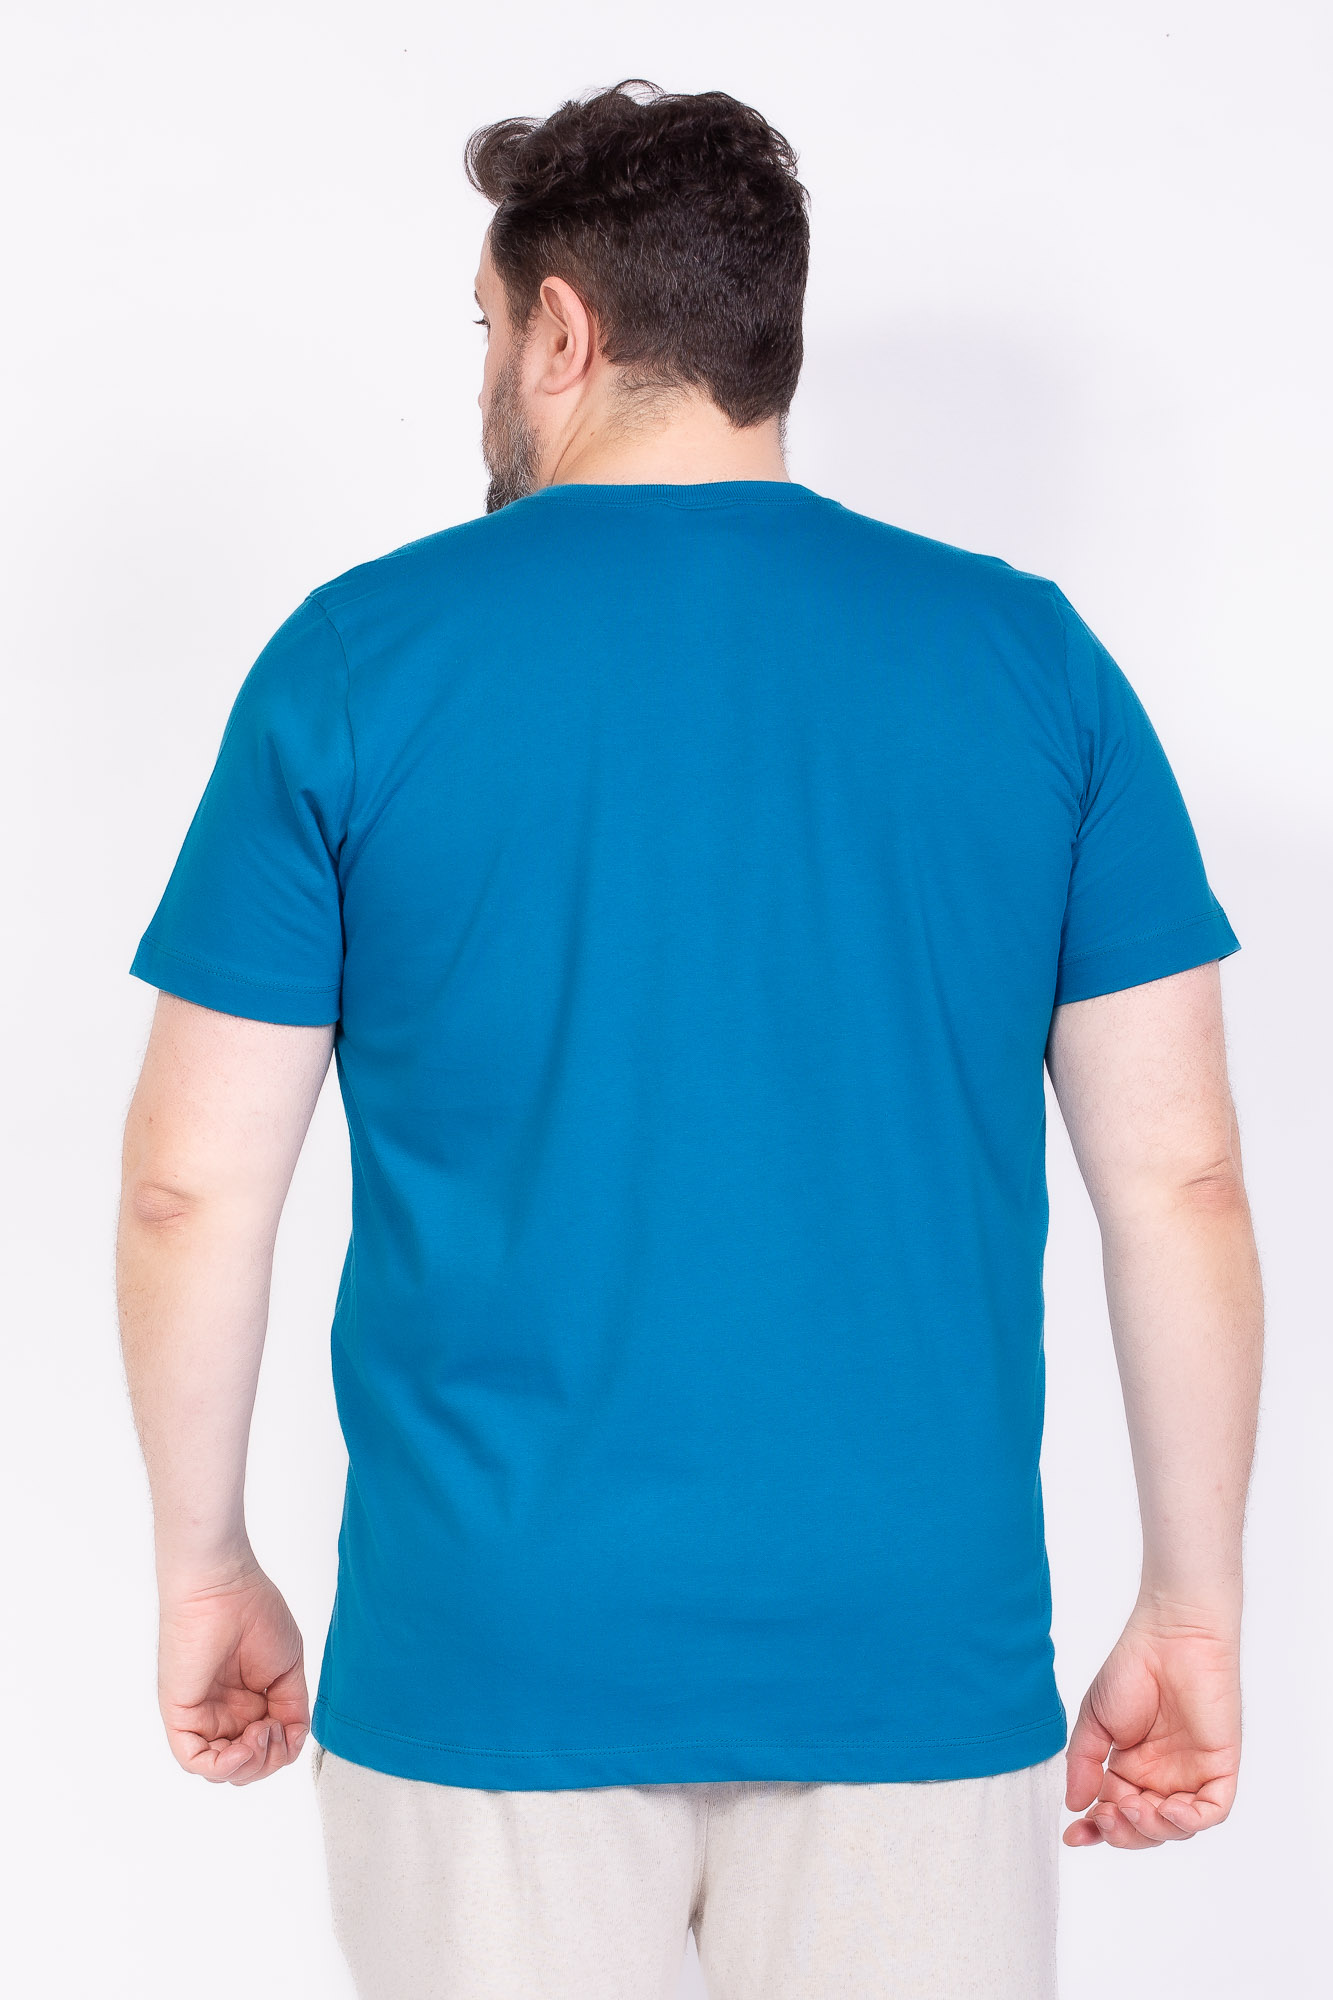 Camiseta Básica 100% algodão azul esmeralda Plus size